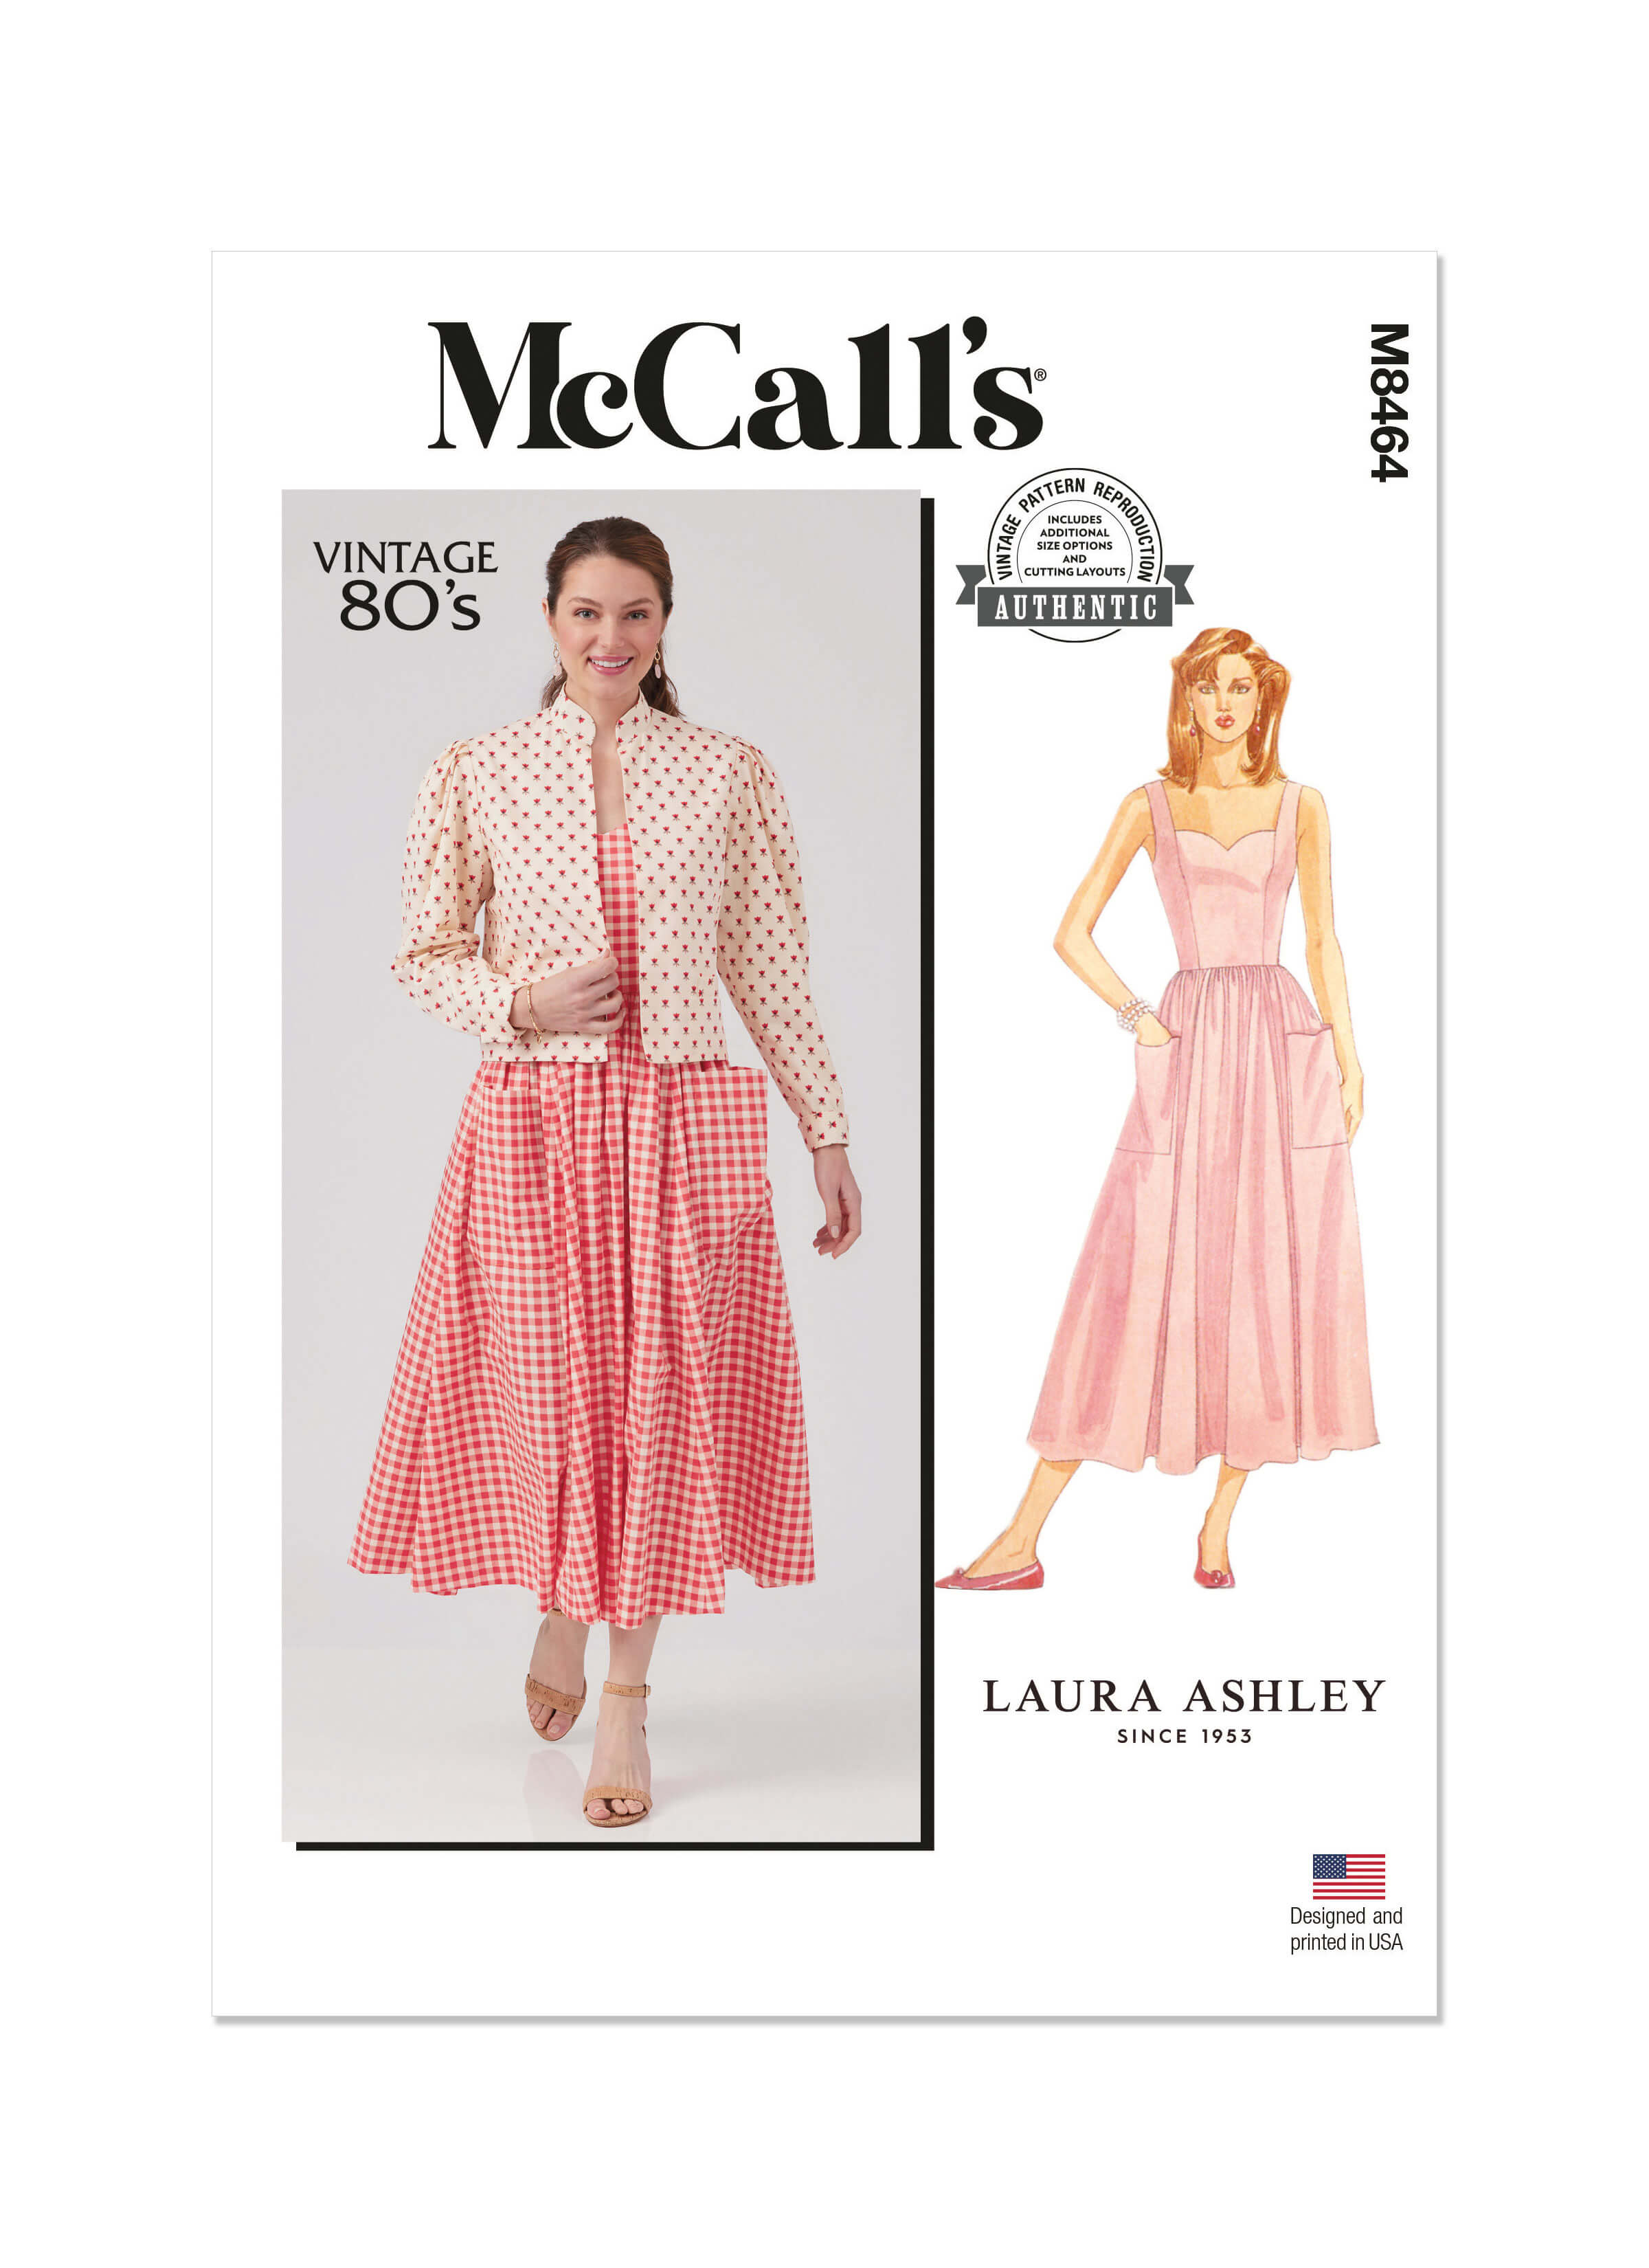 McCall's Sewing Patterns - Sewdirect